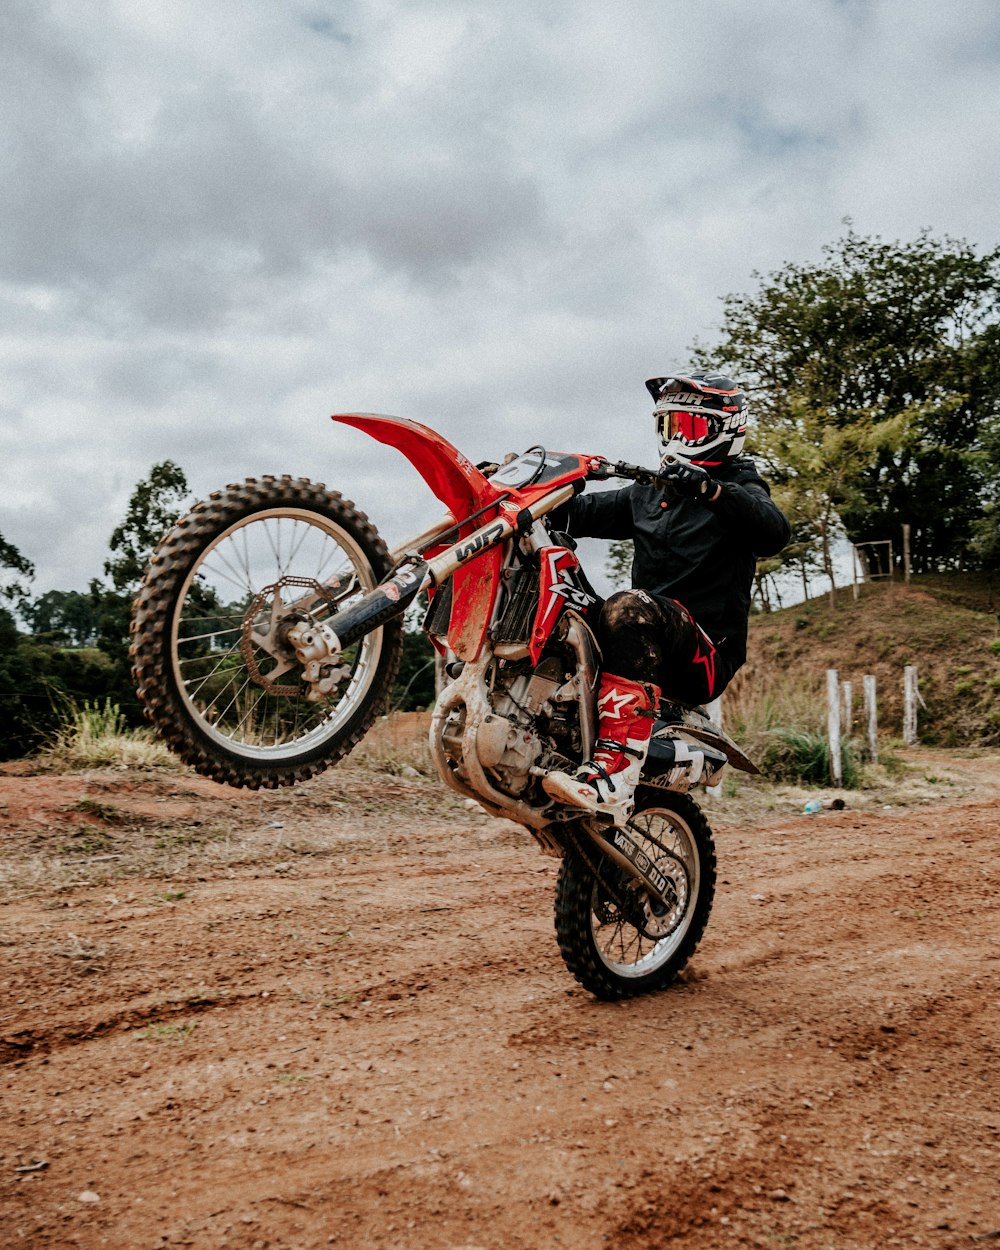 Red and black motocross dirt bike photo – Free Curitiba Image on Unsplash